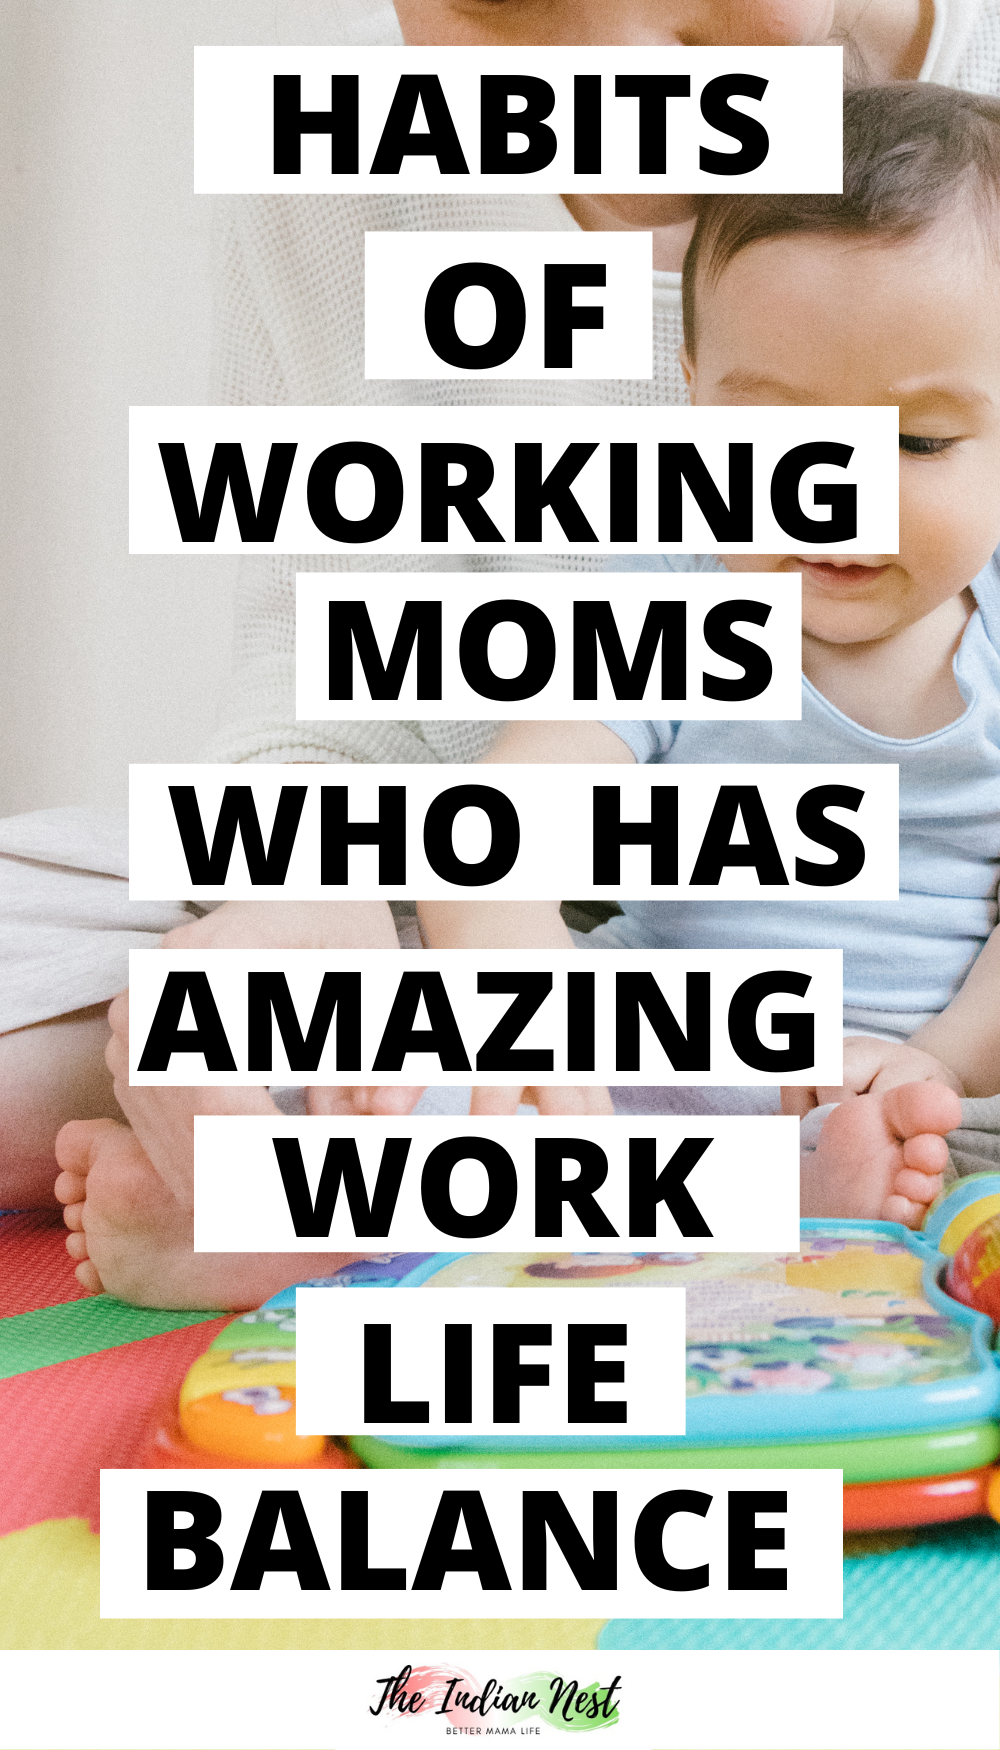 habits of working moms who have amazing work life balance